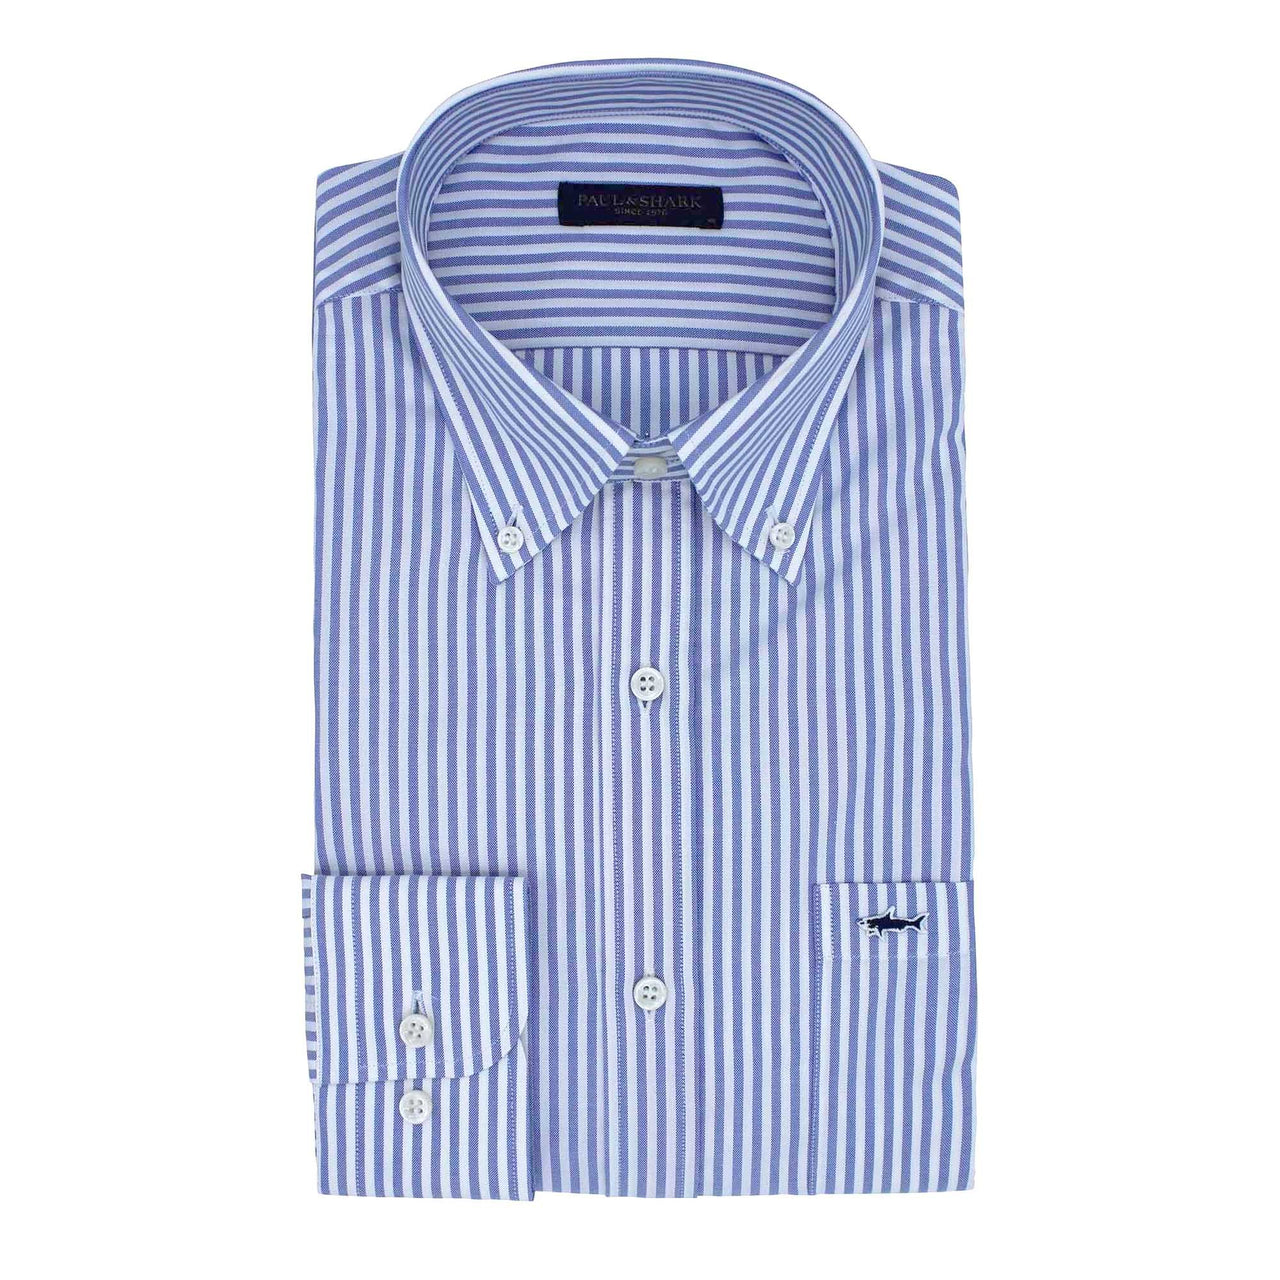 PAUL & SHARK Oxford Stripe Shirt BLUE/WHITE